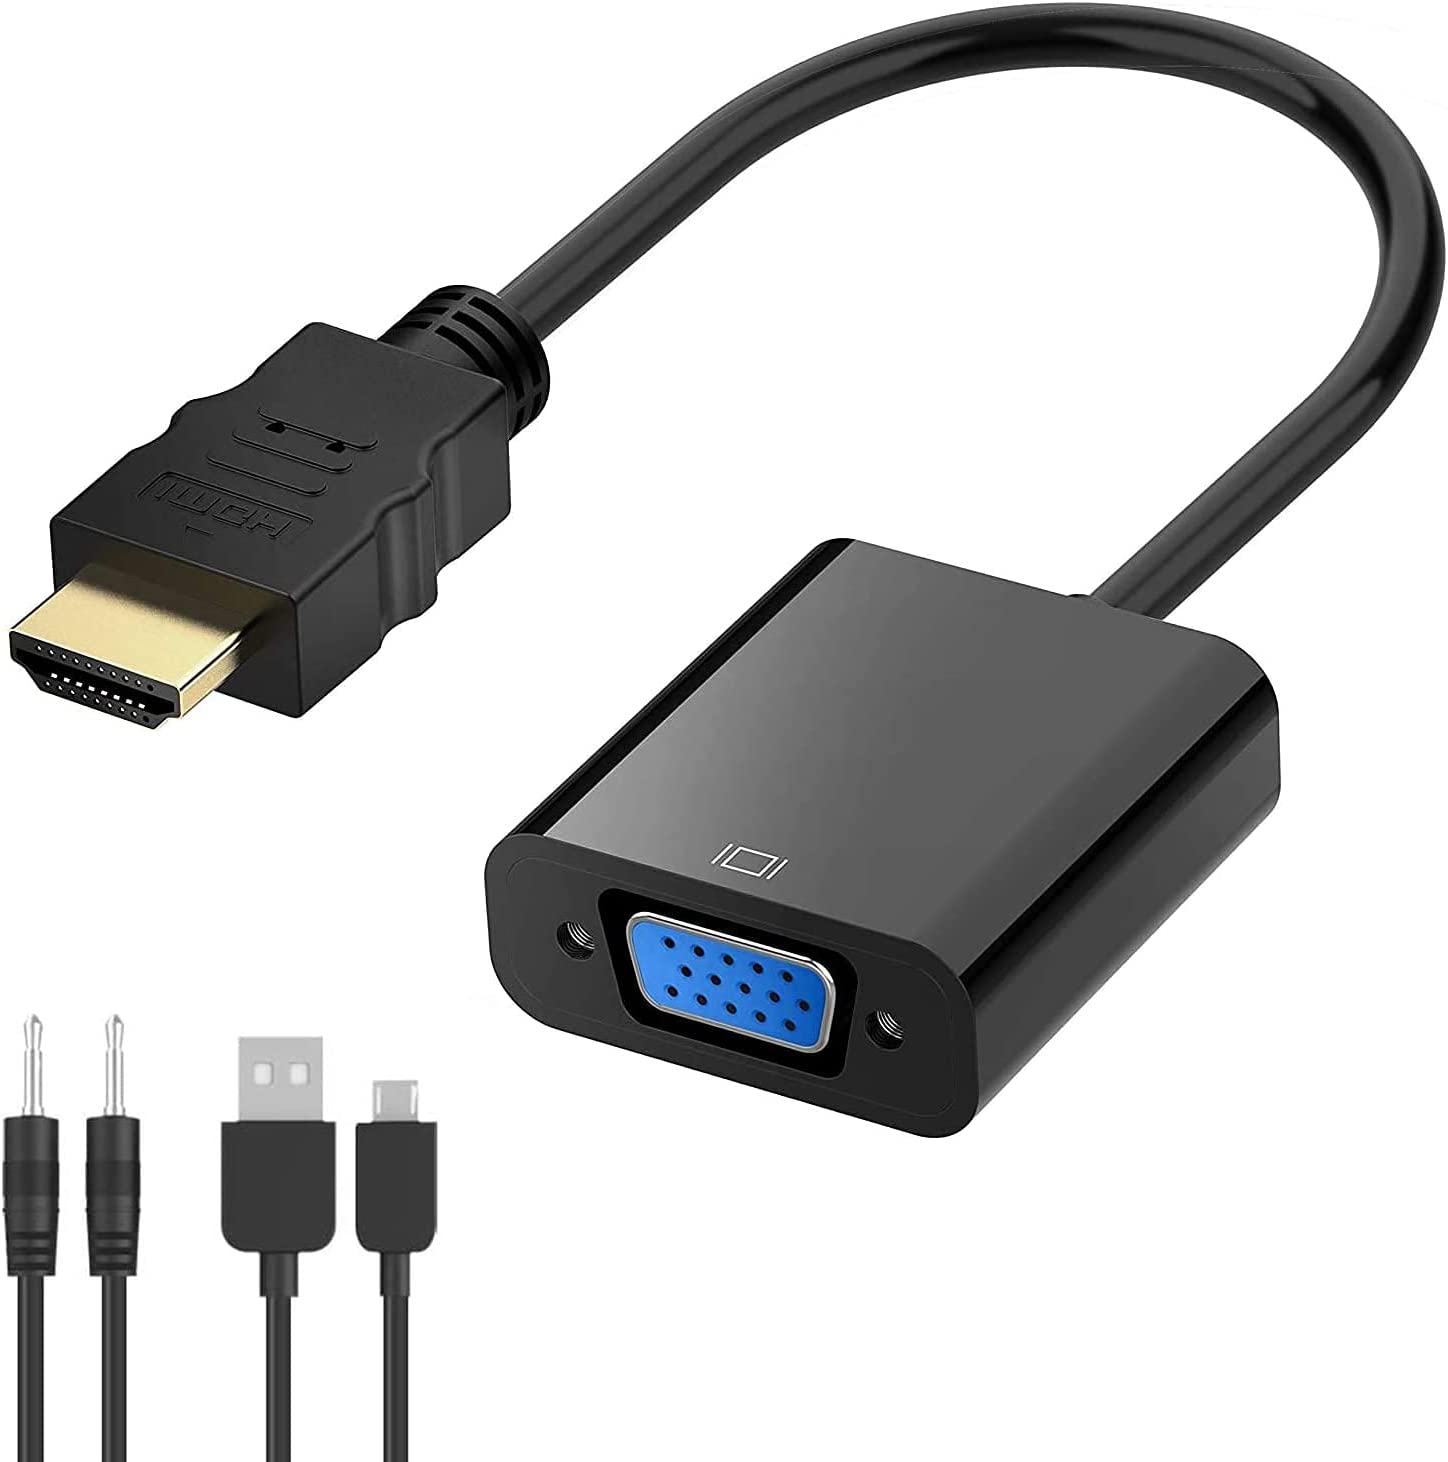 Adaptador HDMI a VGA con Audio de 3.5mm y Micro USB Cable de Carga,1080P Convertidor Adaptador Portátil para PC, Portátiles, HDTV Proyectores, PS4/3 XBOX y Otros Dispositivos HDMI